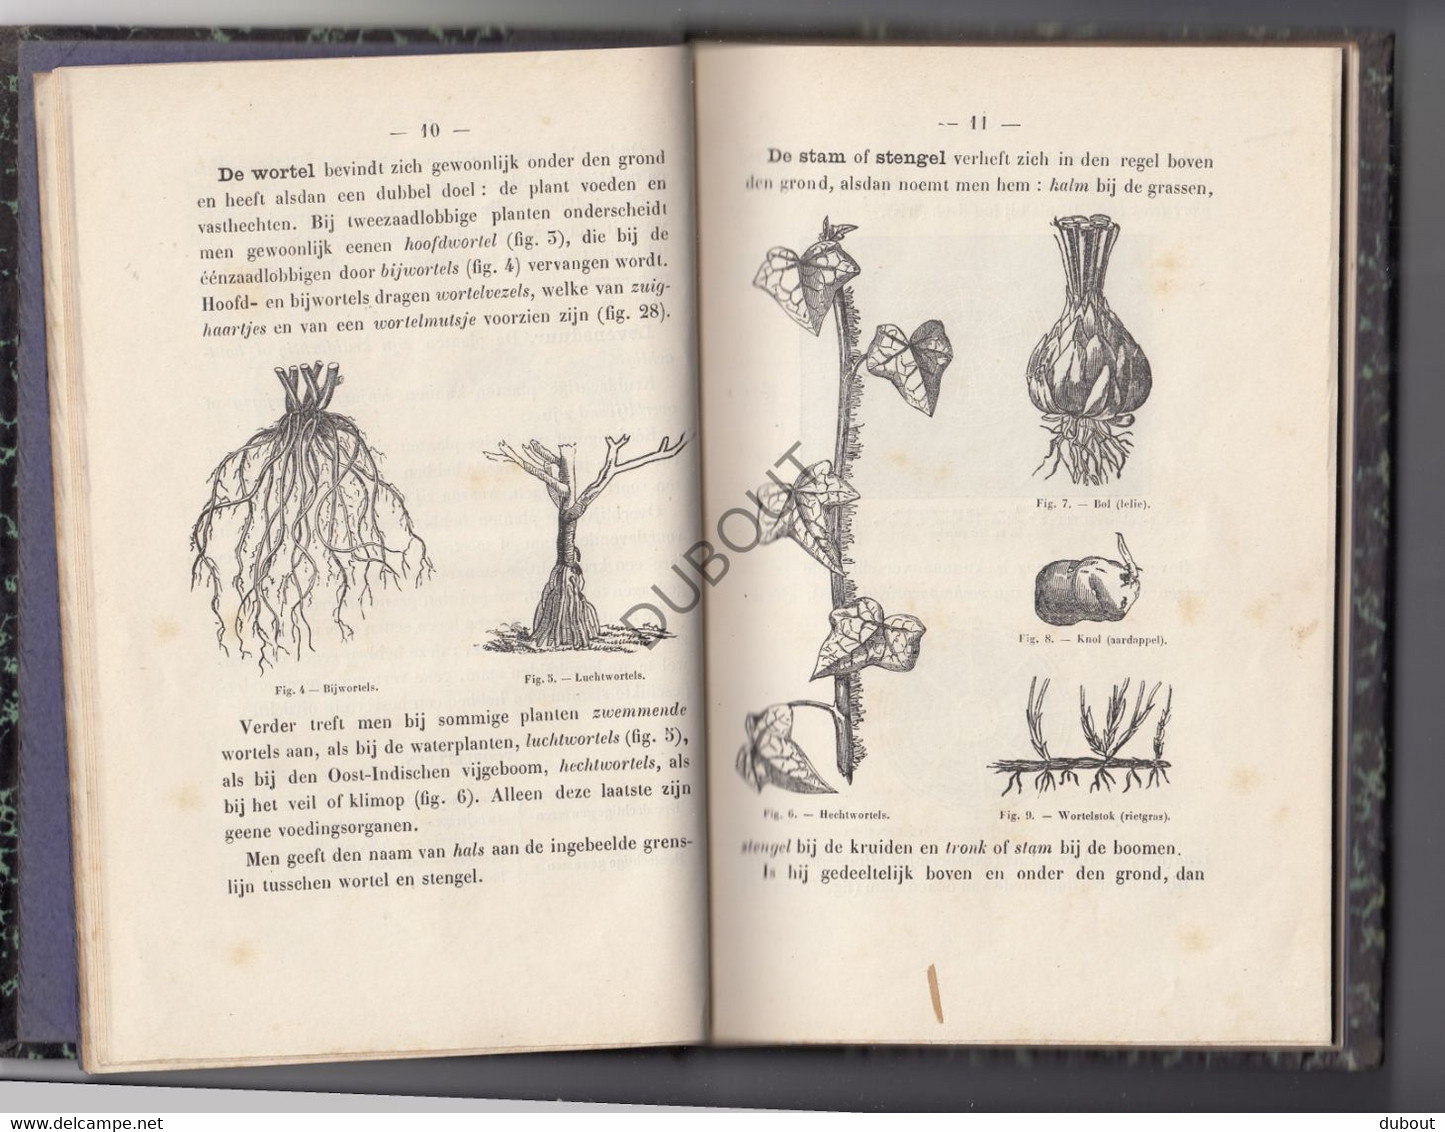 Gent - Plantenkunde - J. Roelant - Gesigneerd ± 1880? (W97) - Anciens